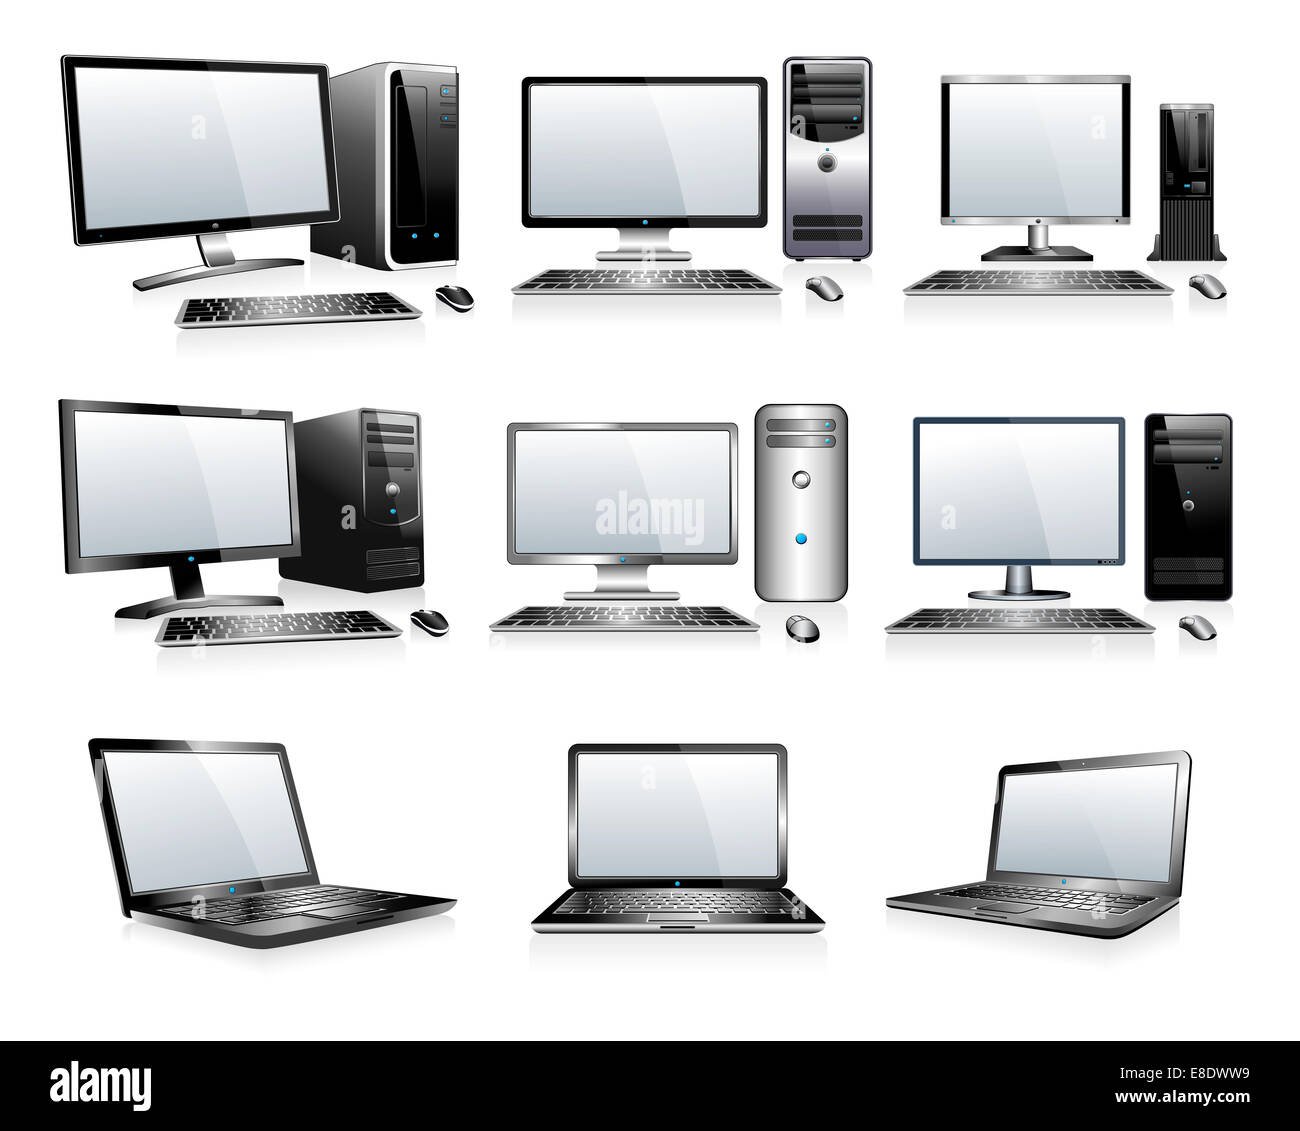 Computer-Technologie - Computer, Desktops, Laptops, PC Stockfoto